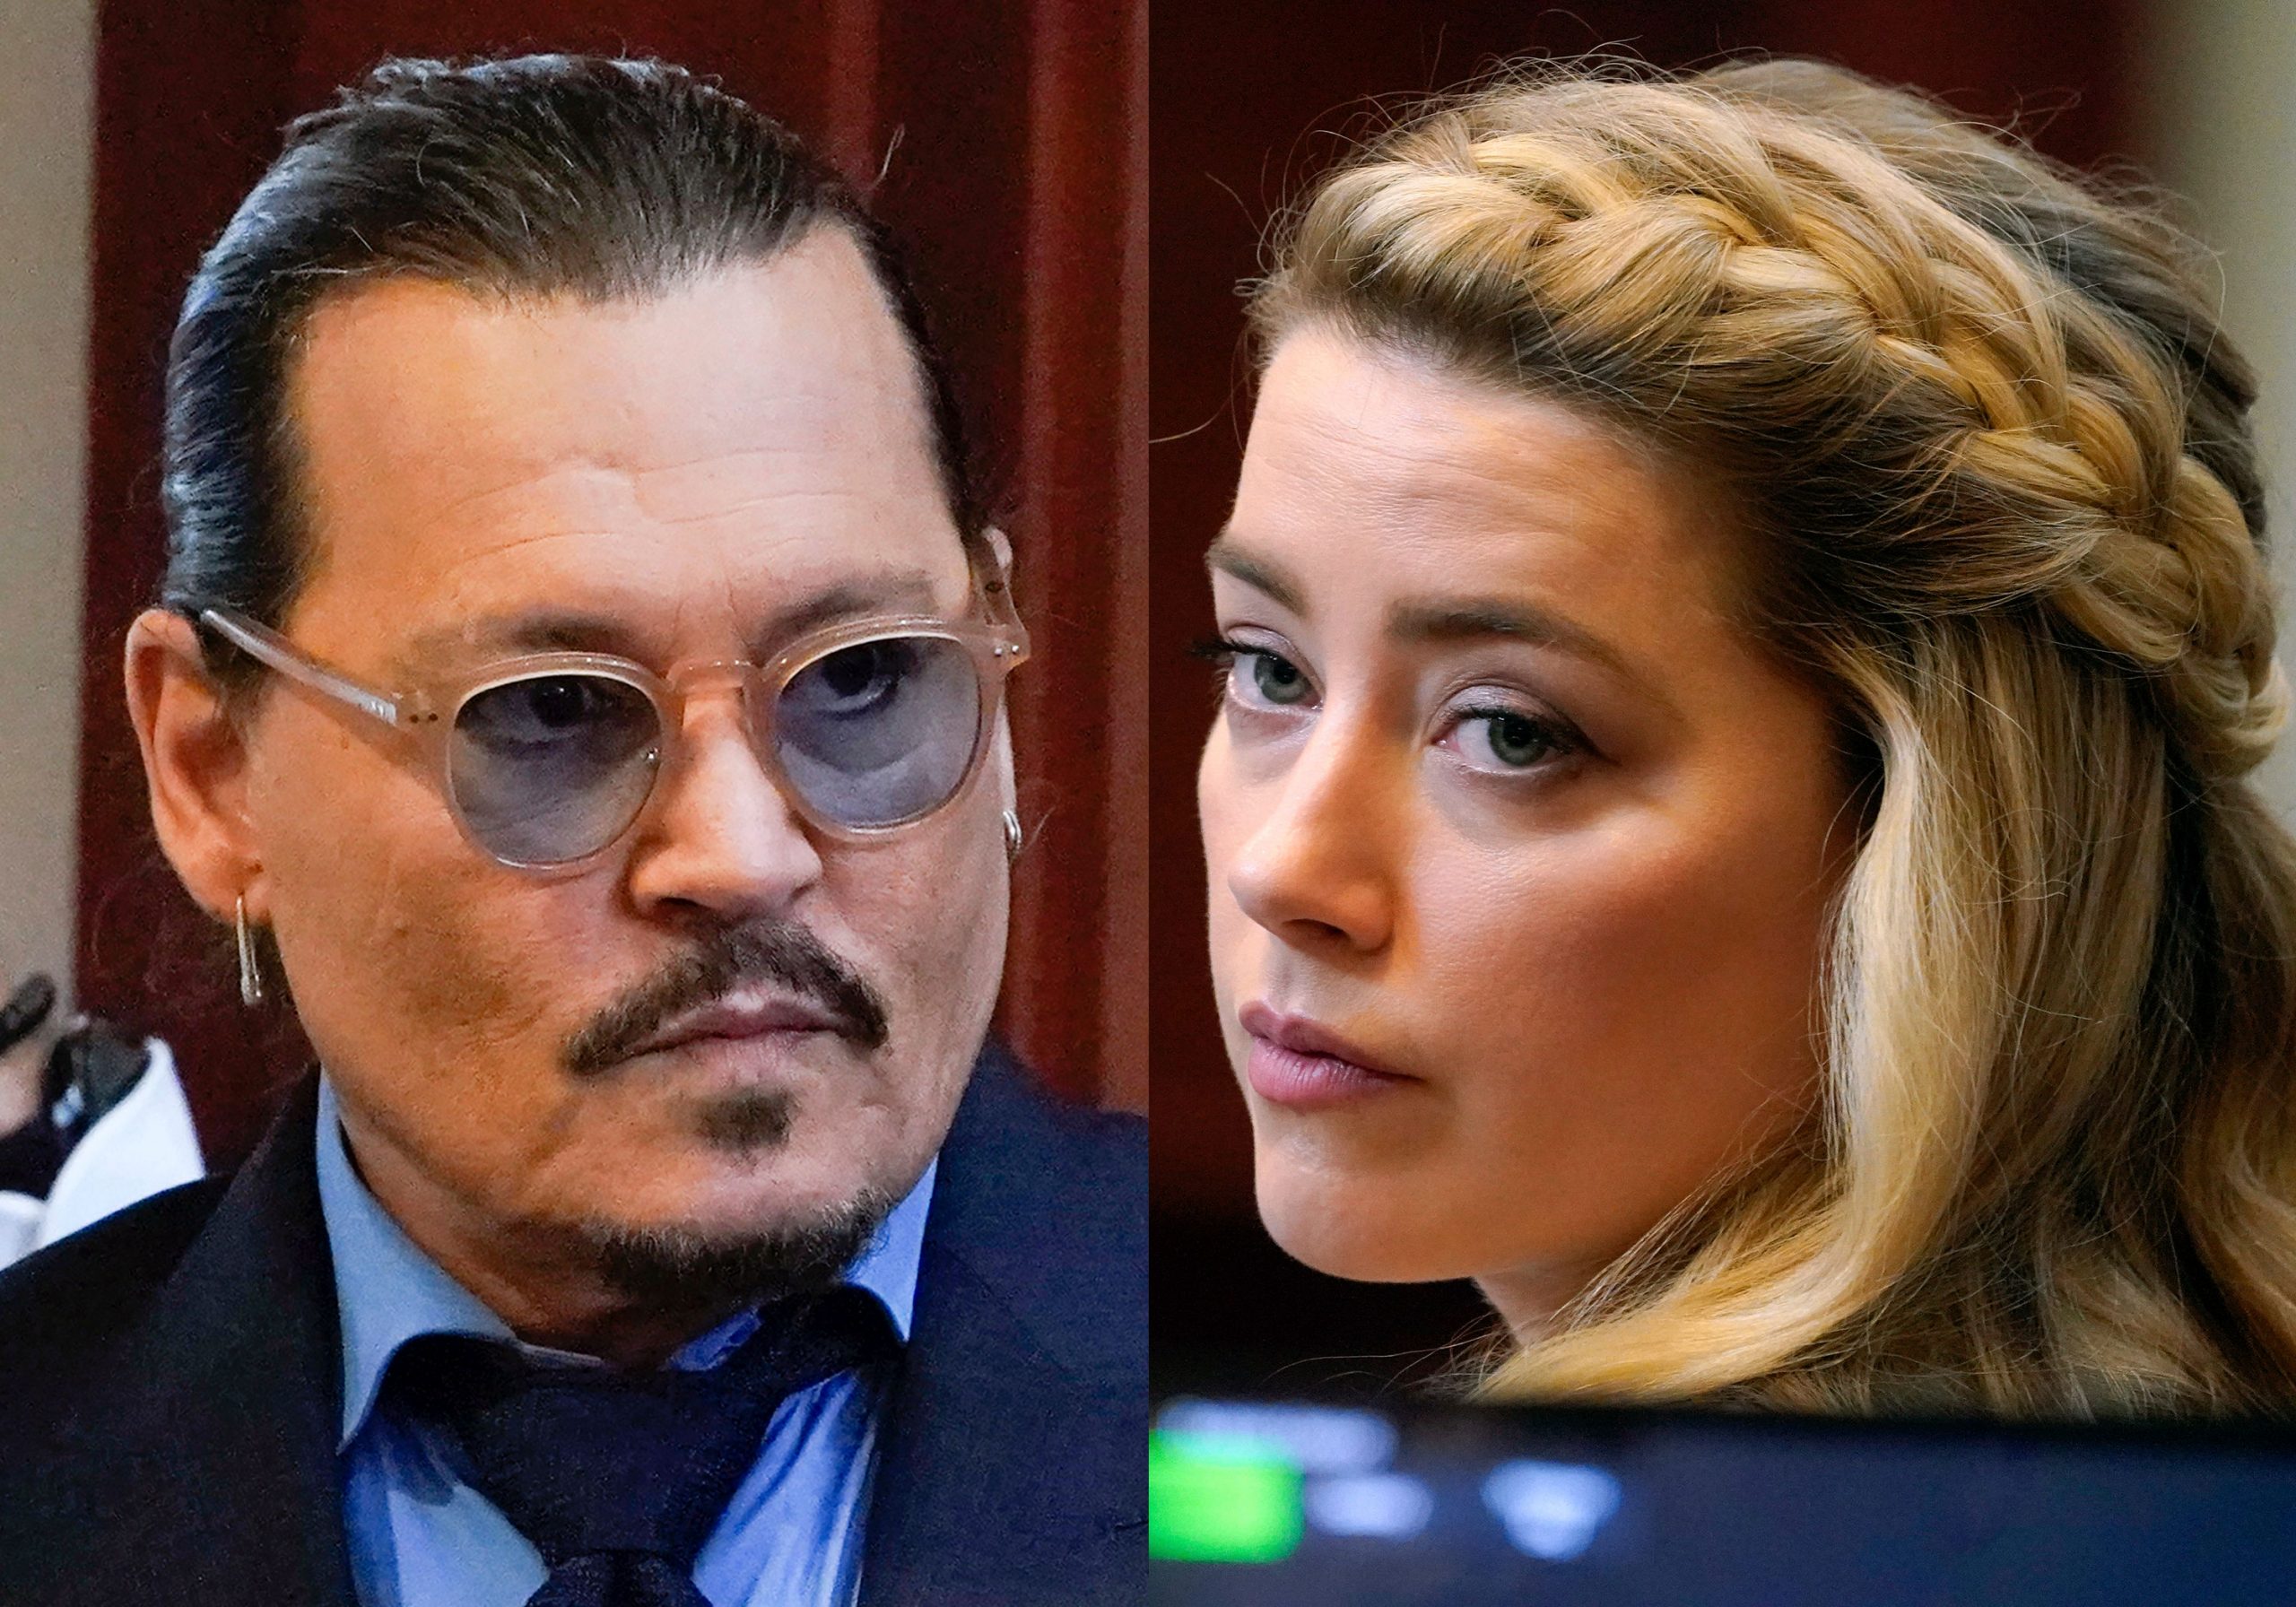 Johnny Depp skips verdict hearing, Amber Heard’s team slams actor